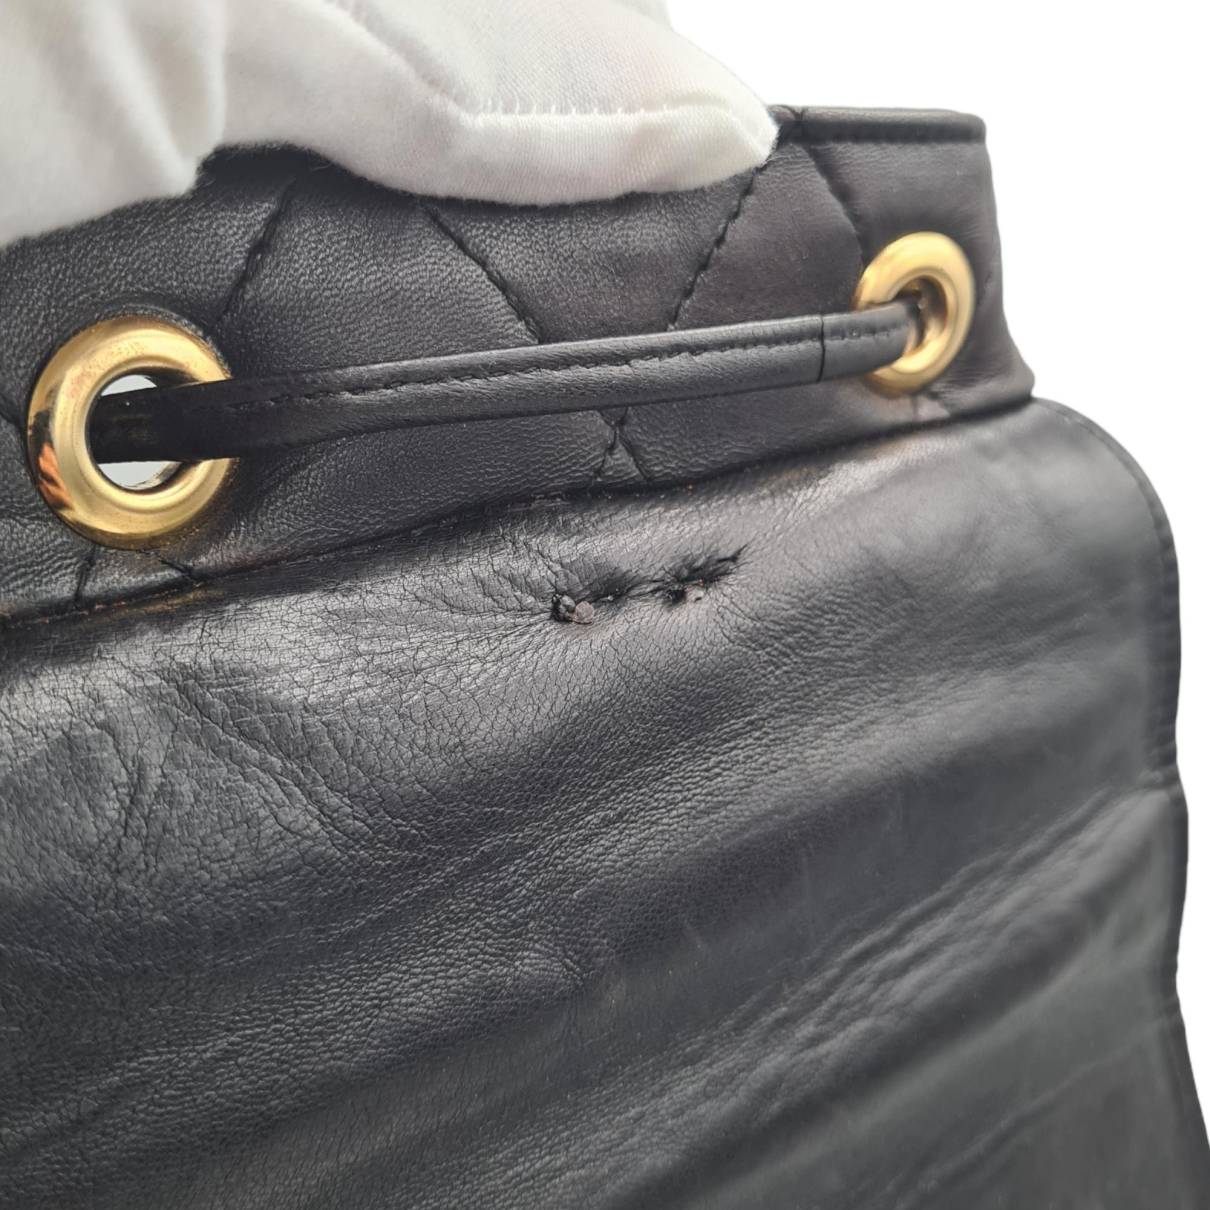 dust bag chanel authentic handbag